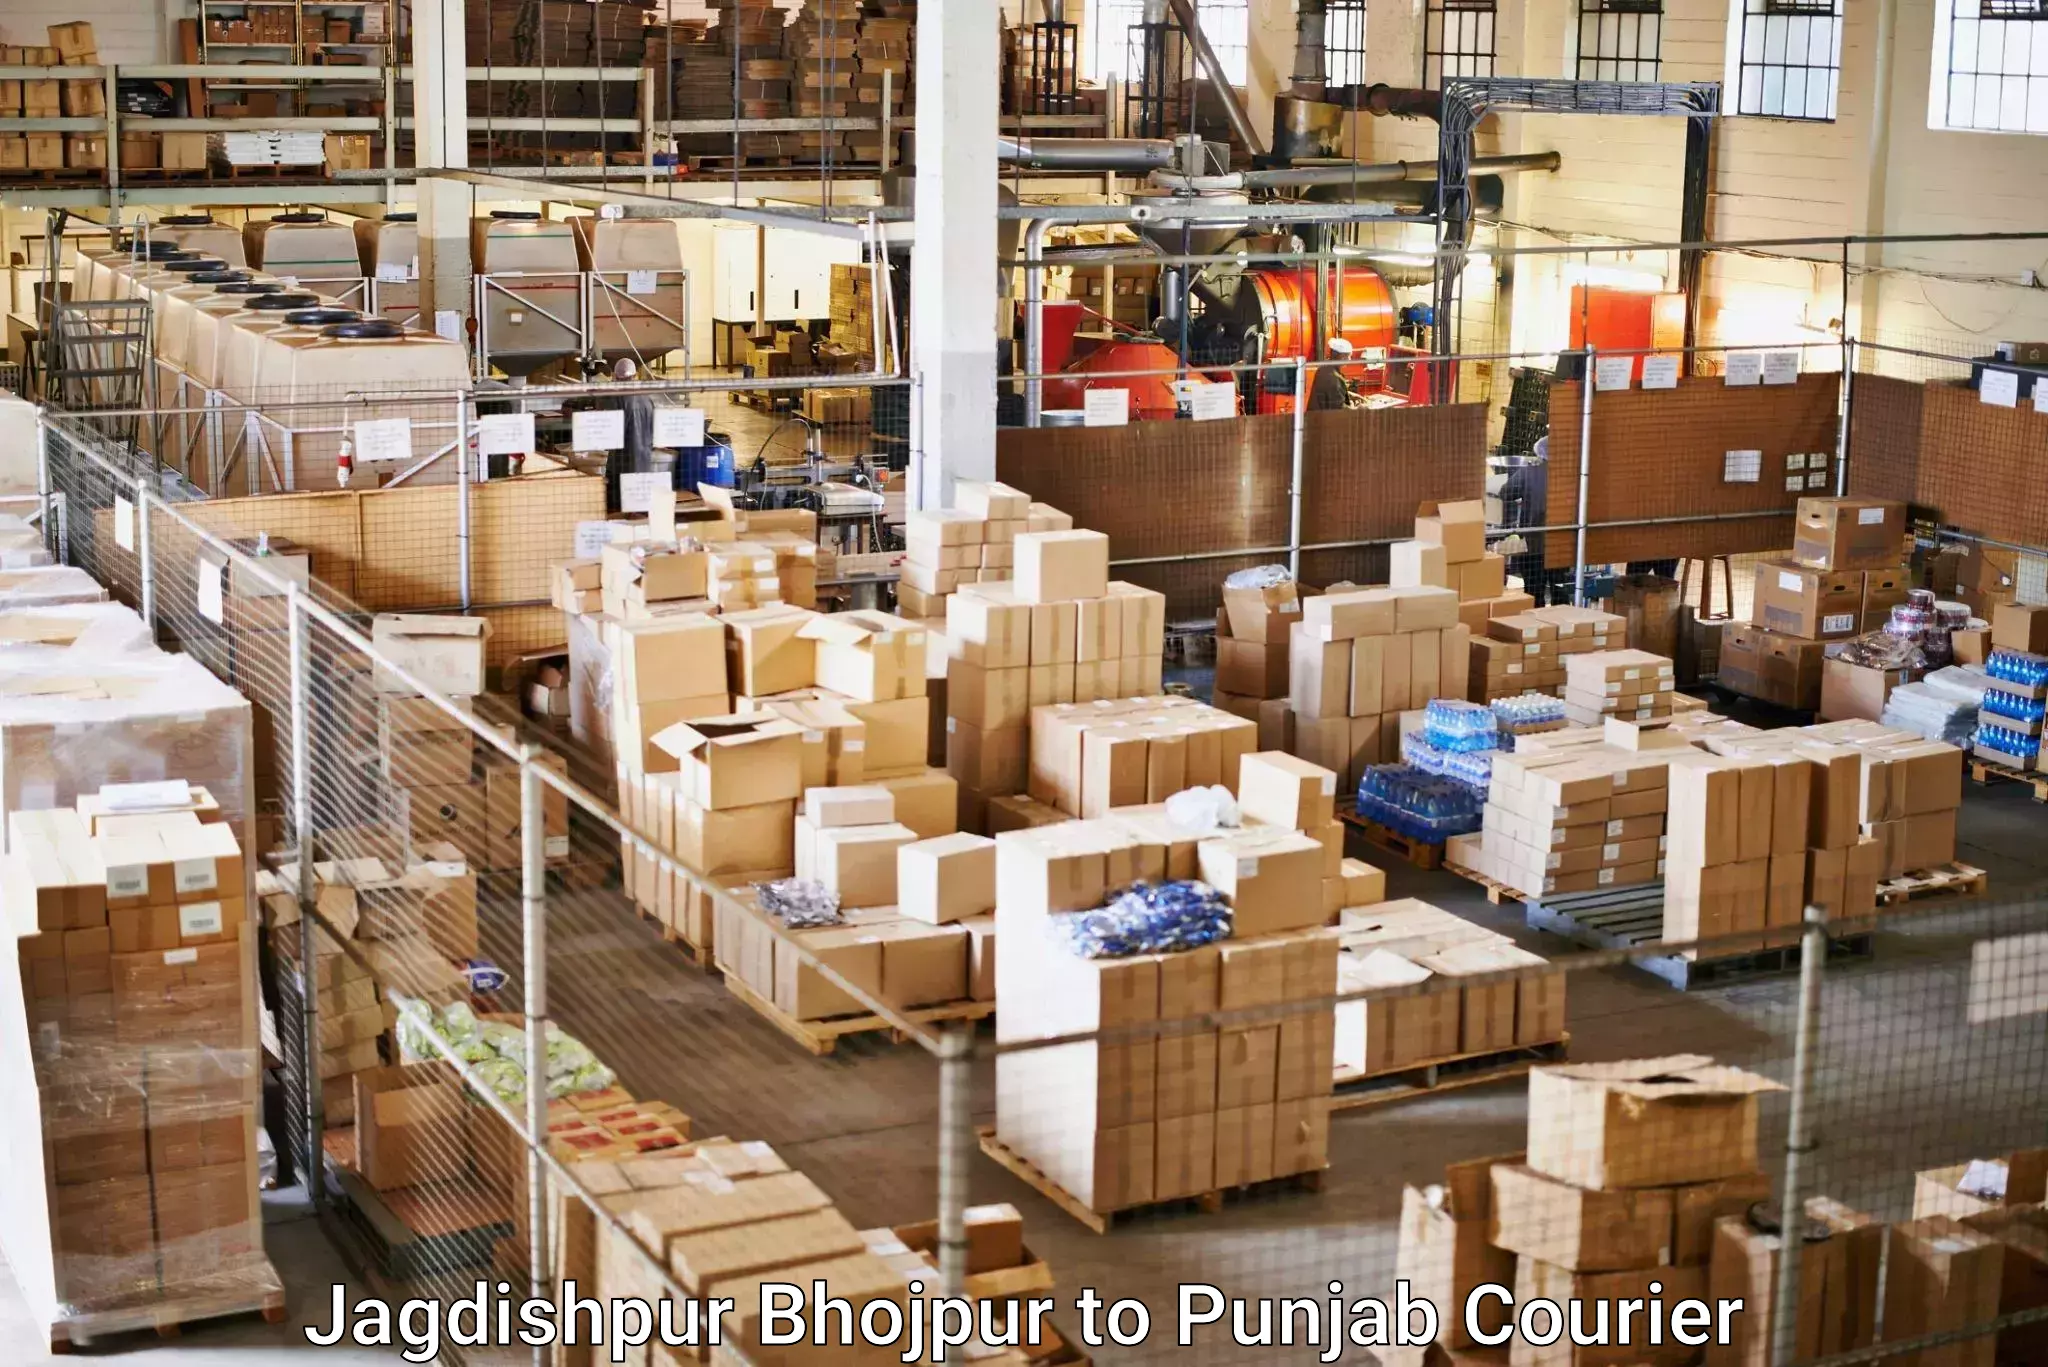 Local delivery service Jagdishpur Bhojpur to Faridkot